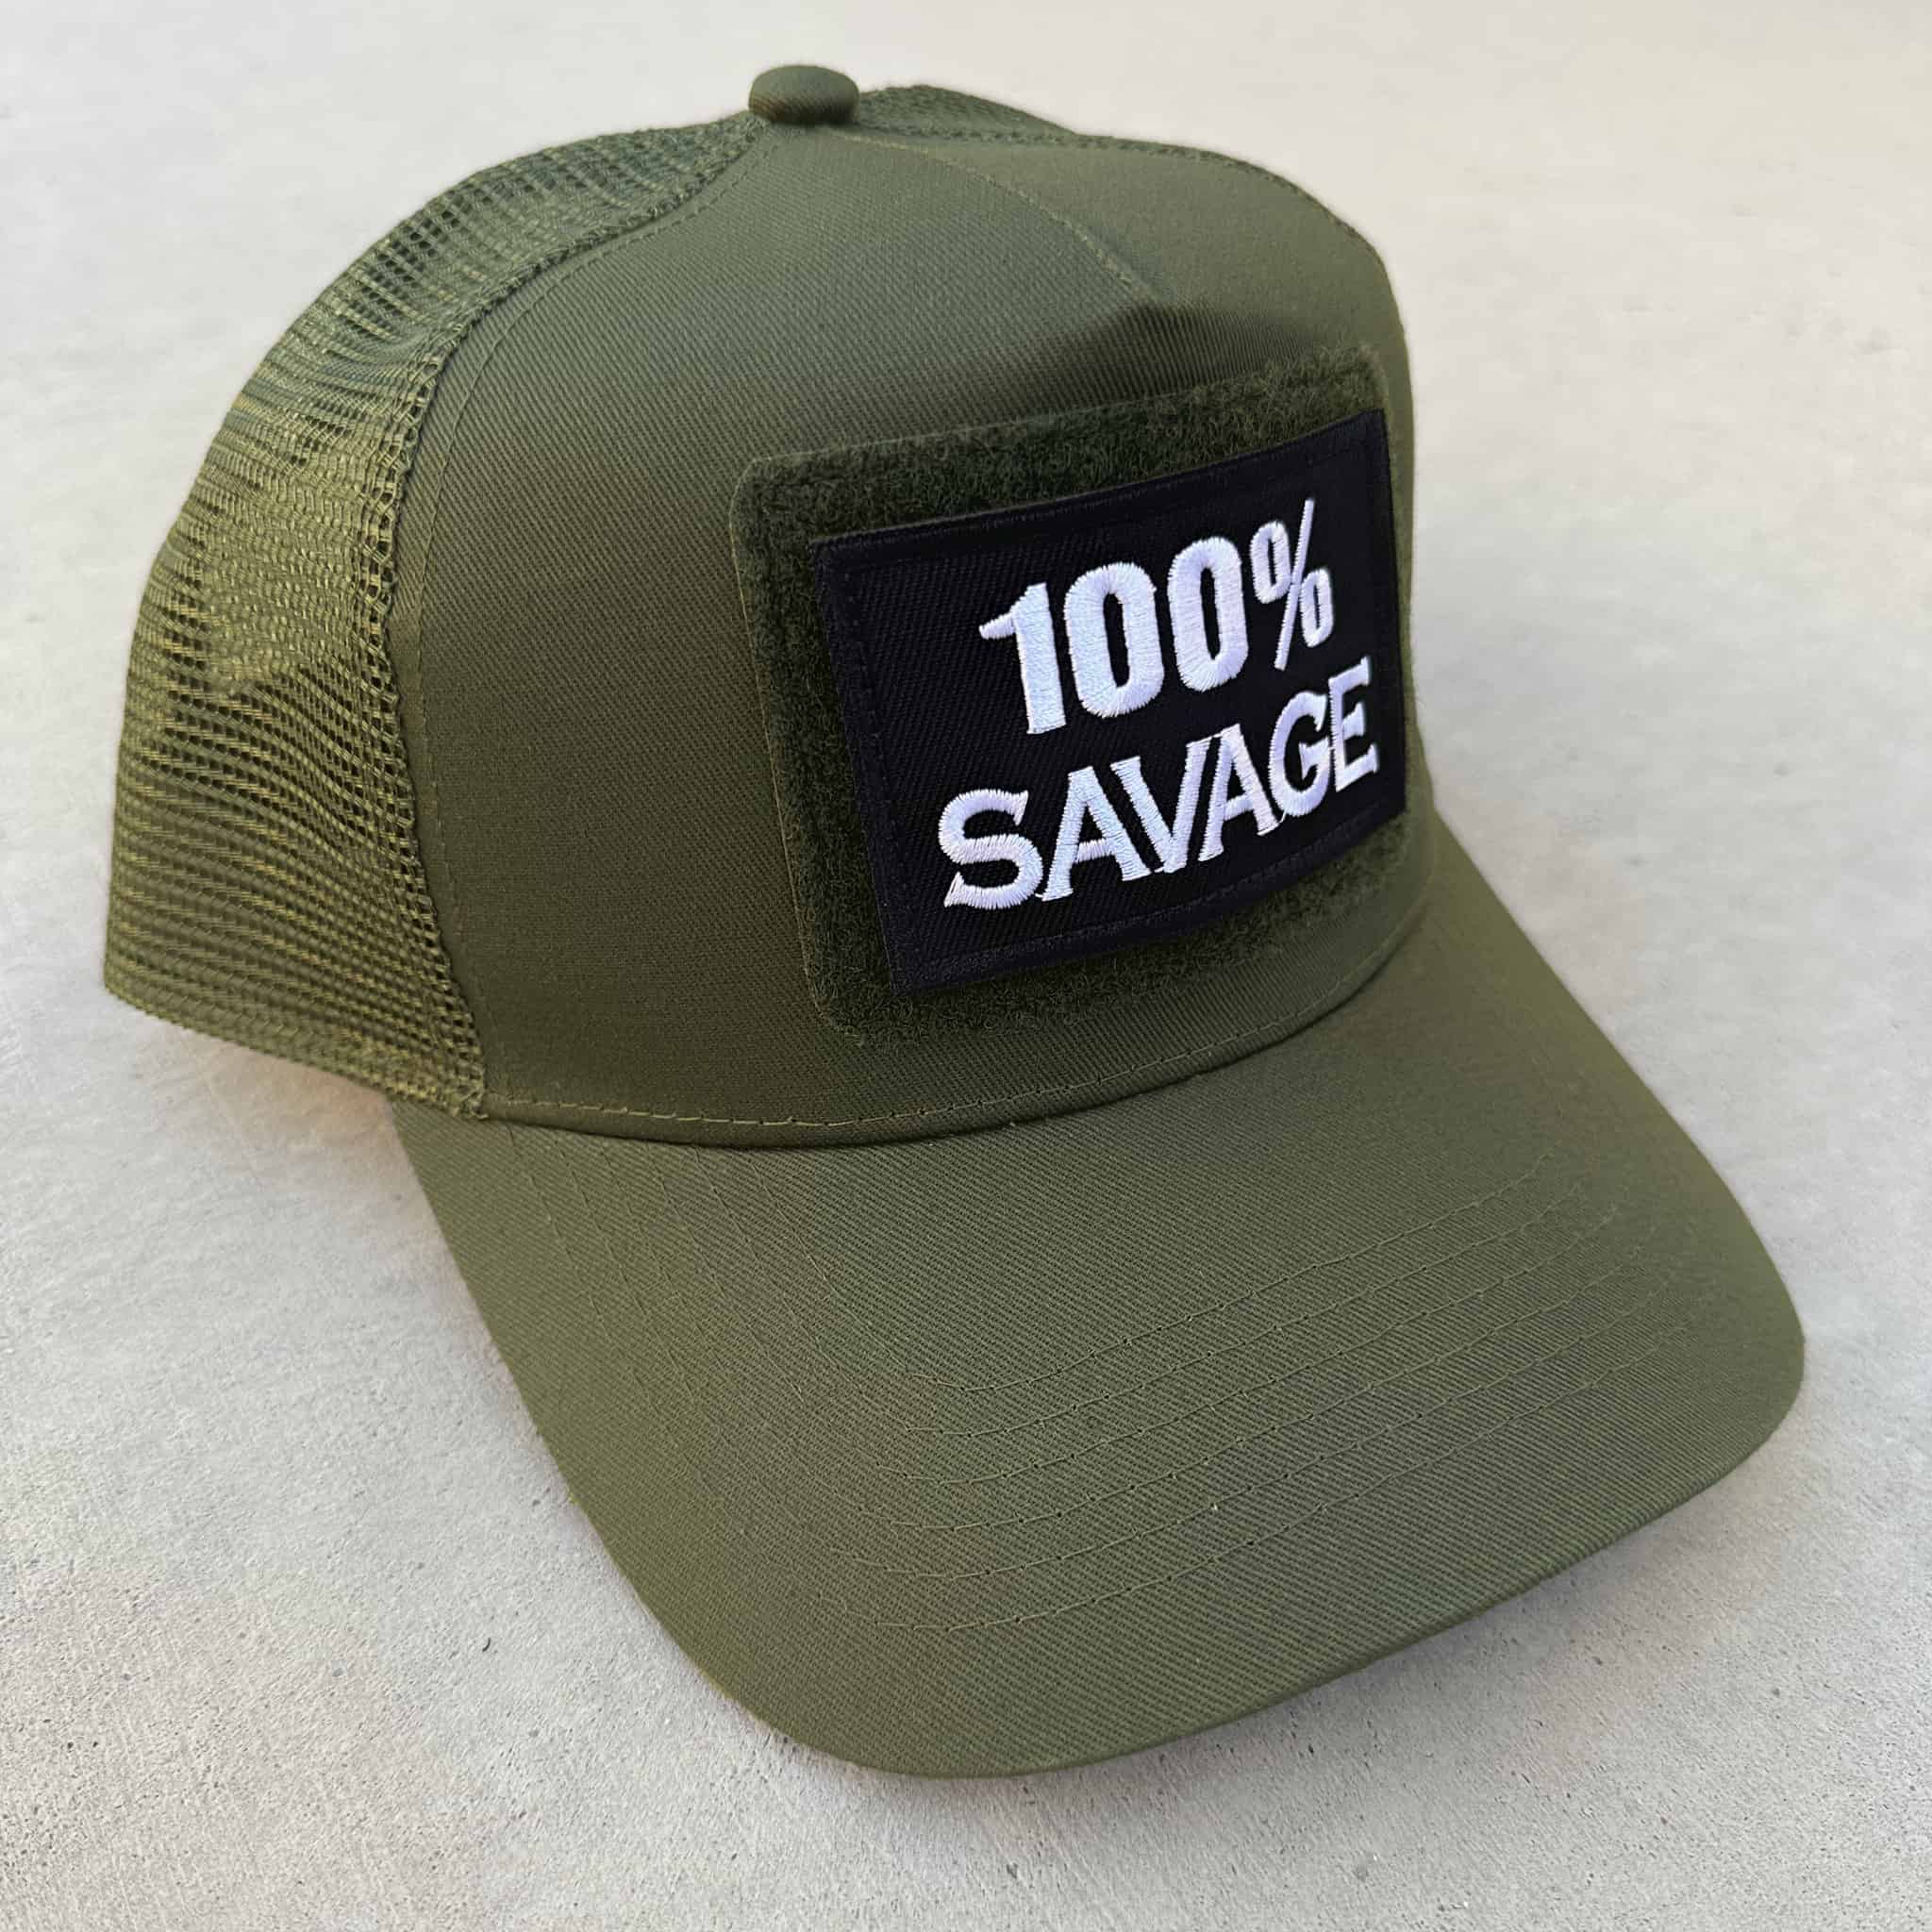 The '100% Savage' trucker snapback cap bundle in military green